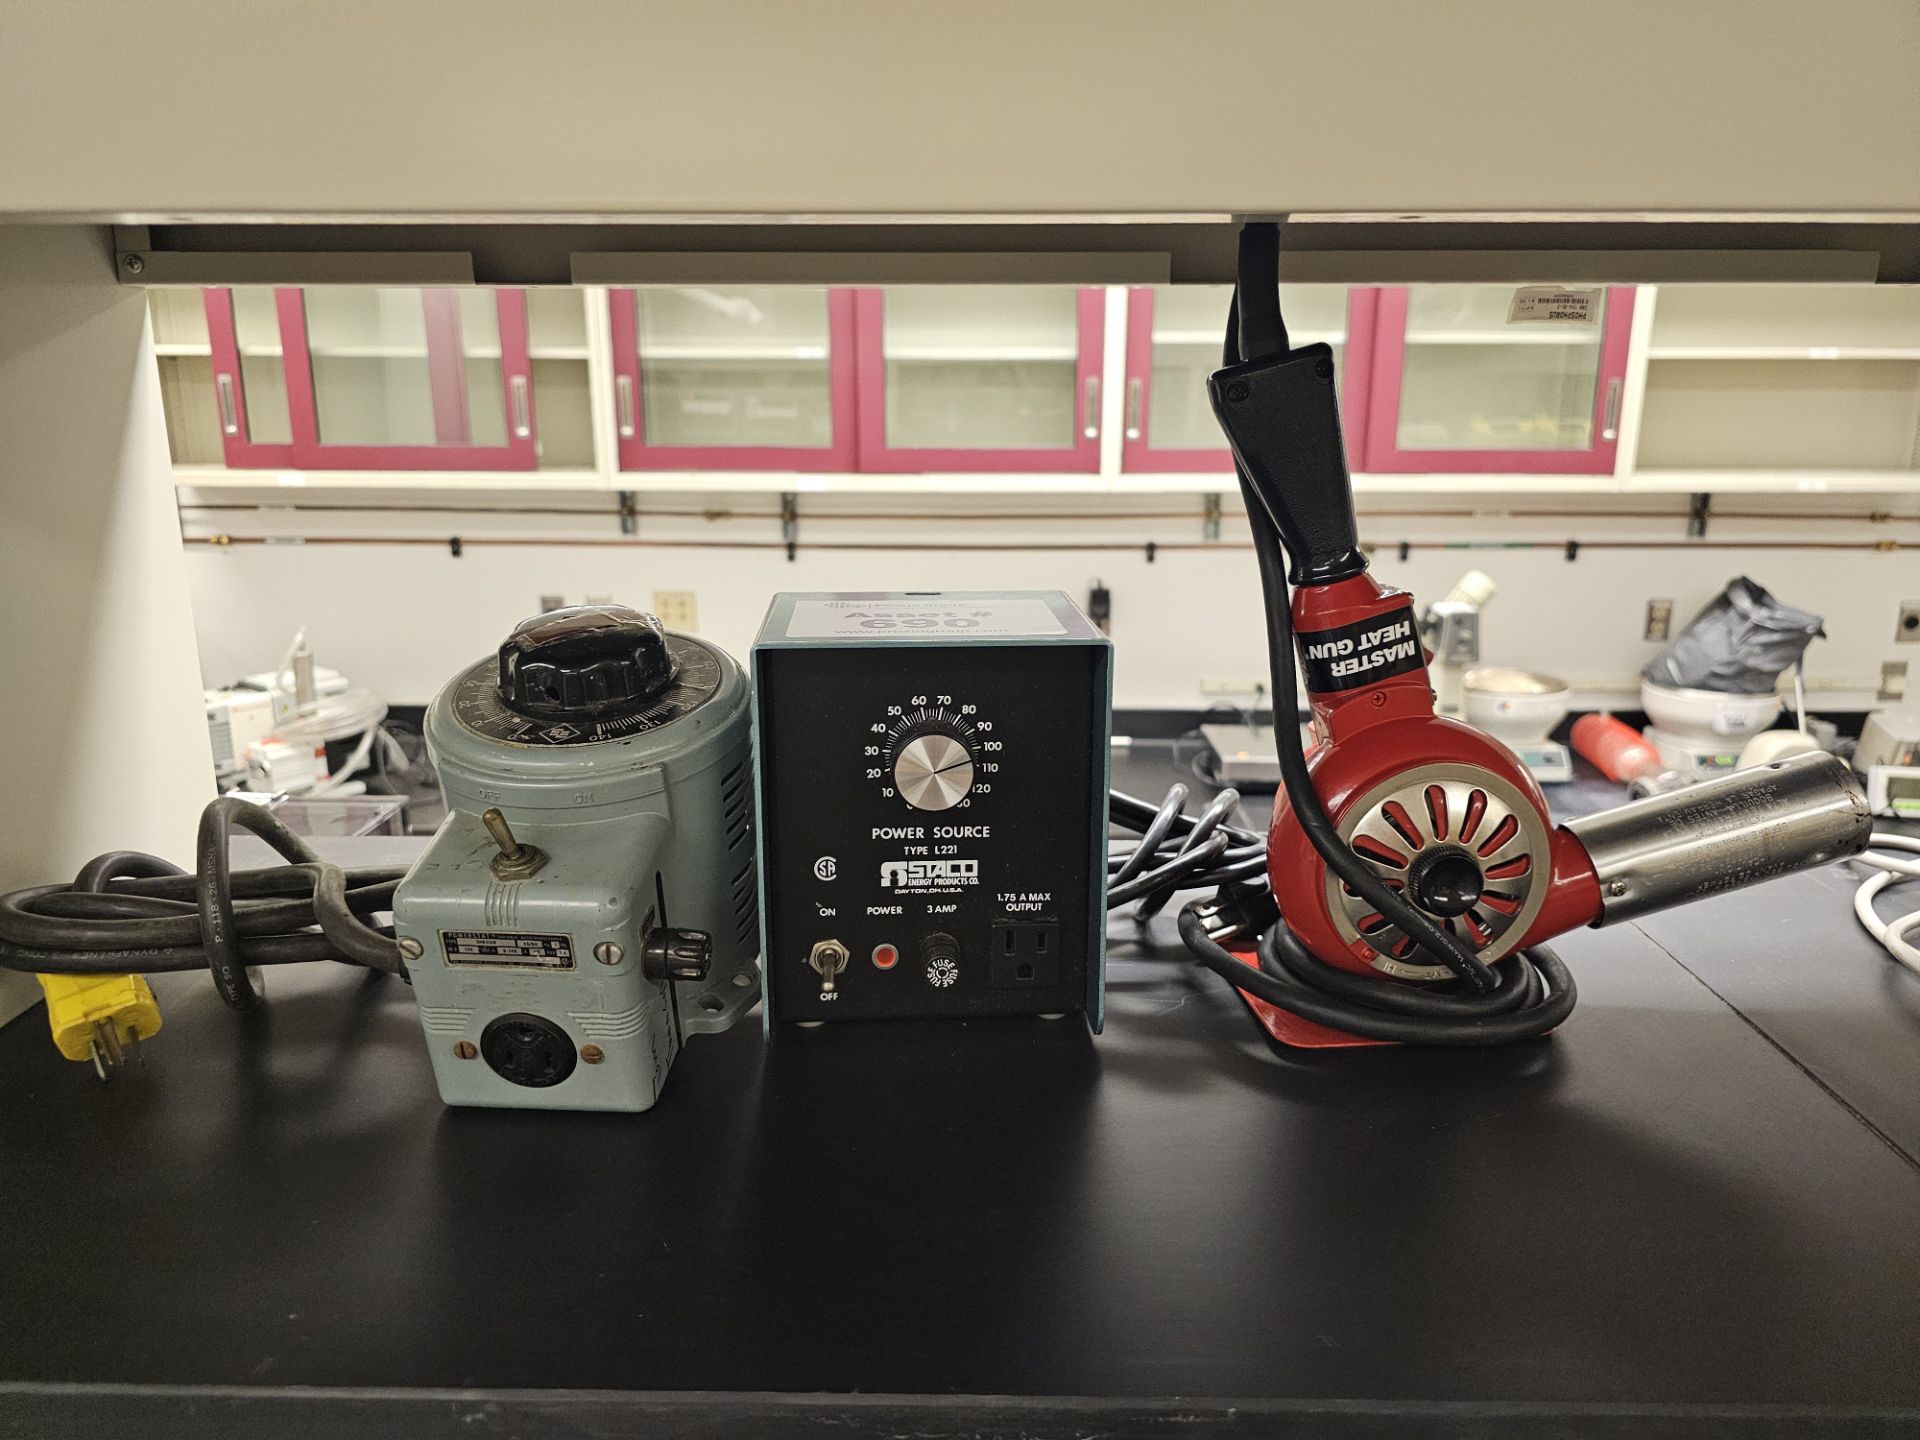 Lab equipment